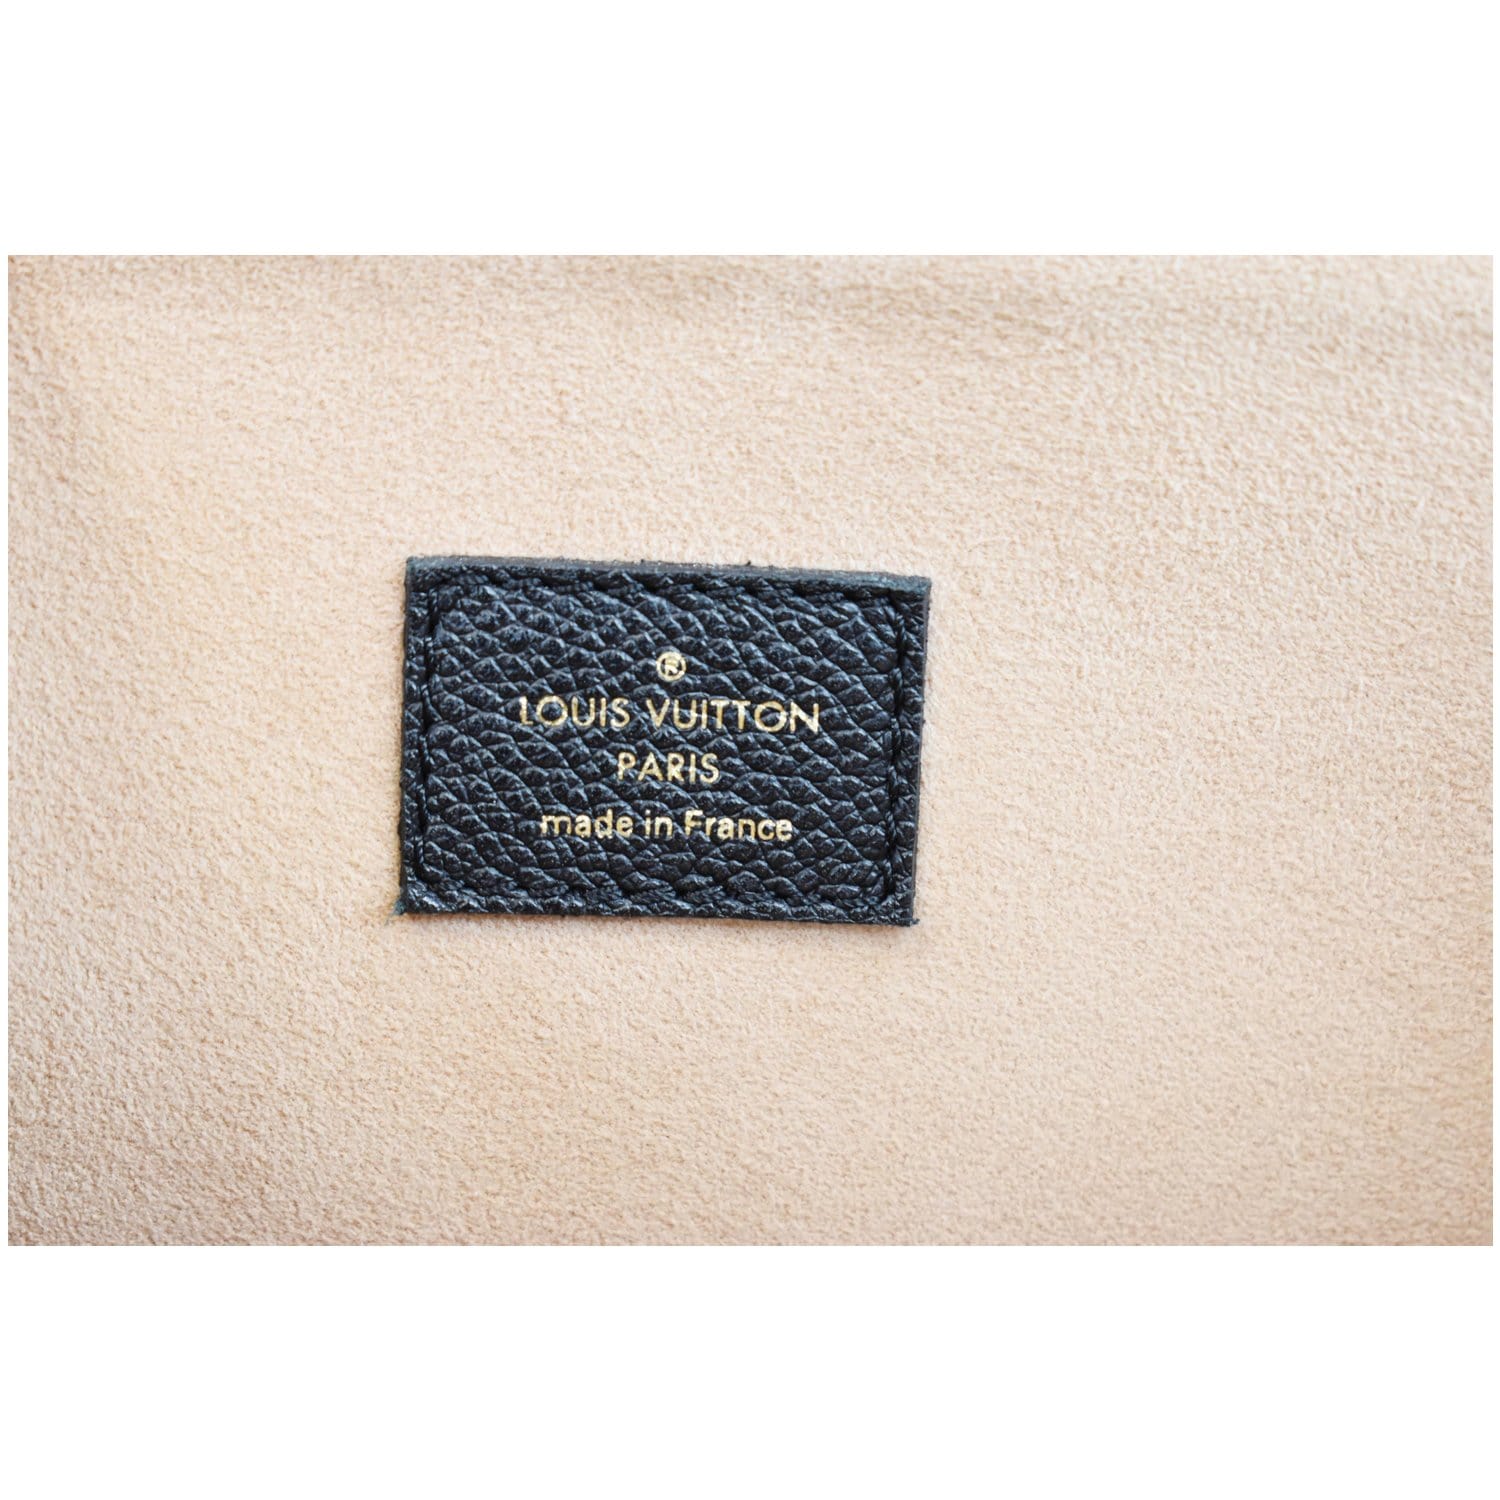 Louis Vuitton Flandrin Monogram Canvas Noir M41595 #Flandrin